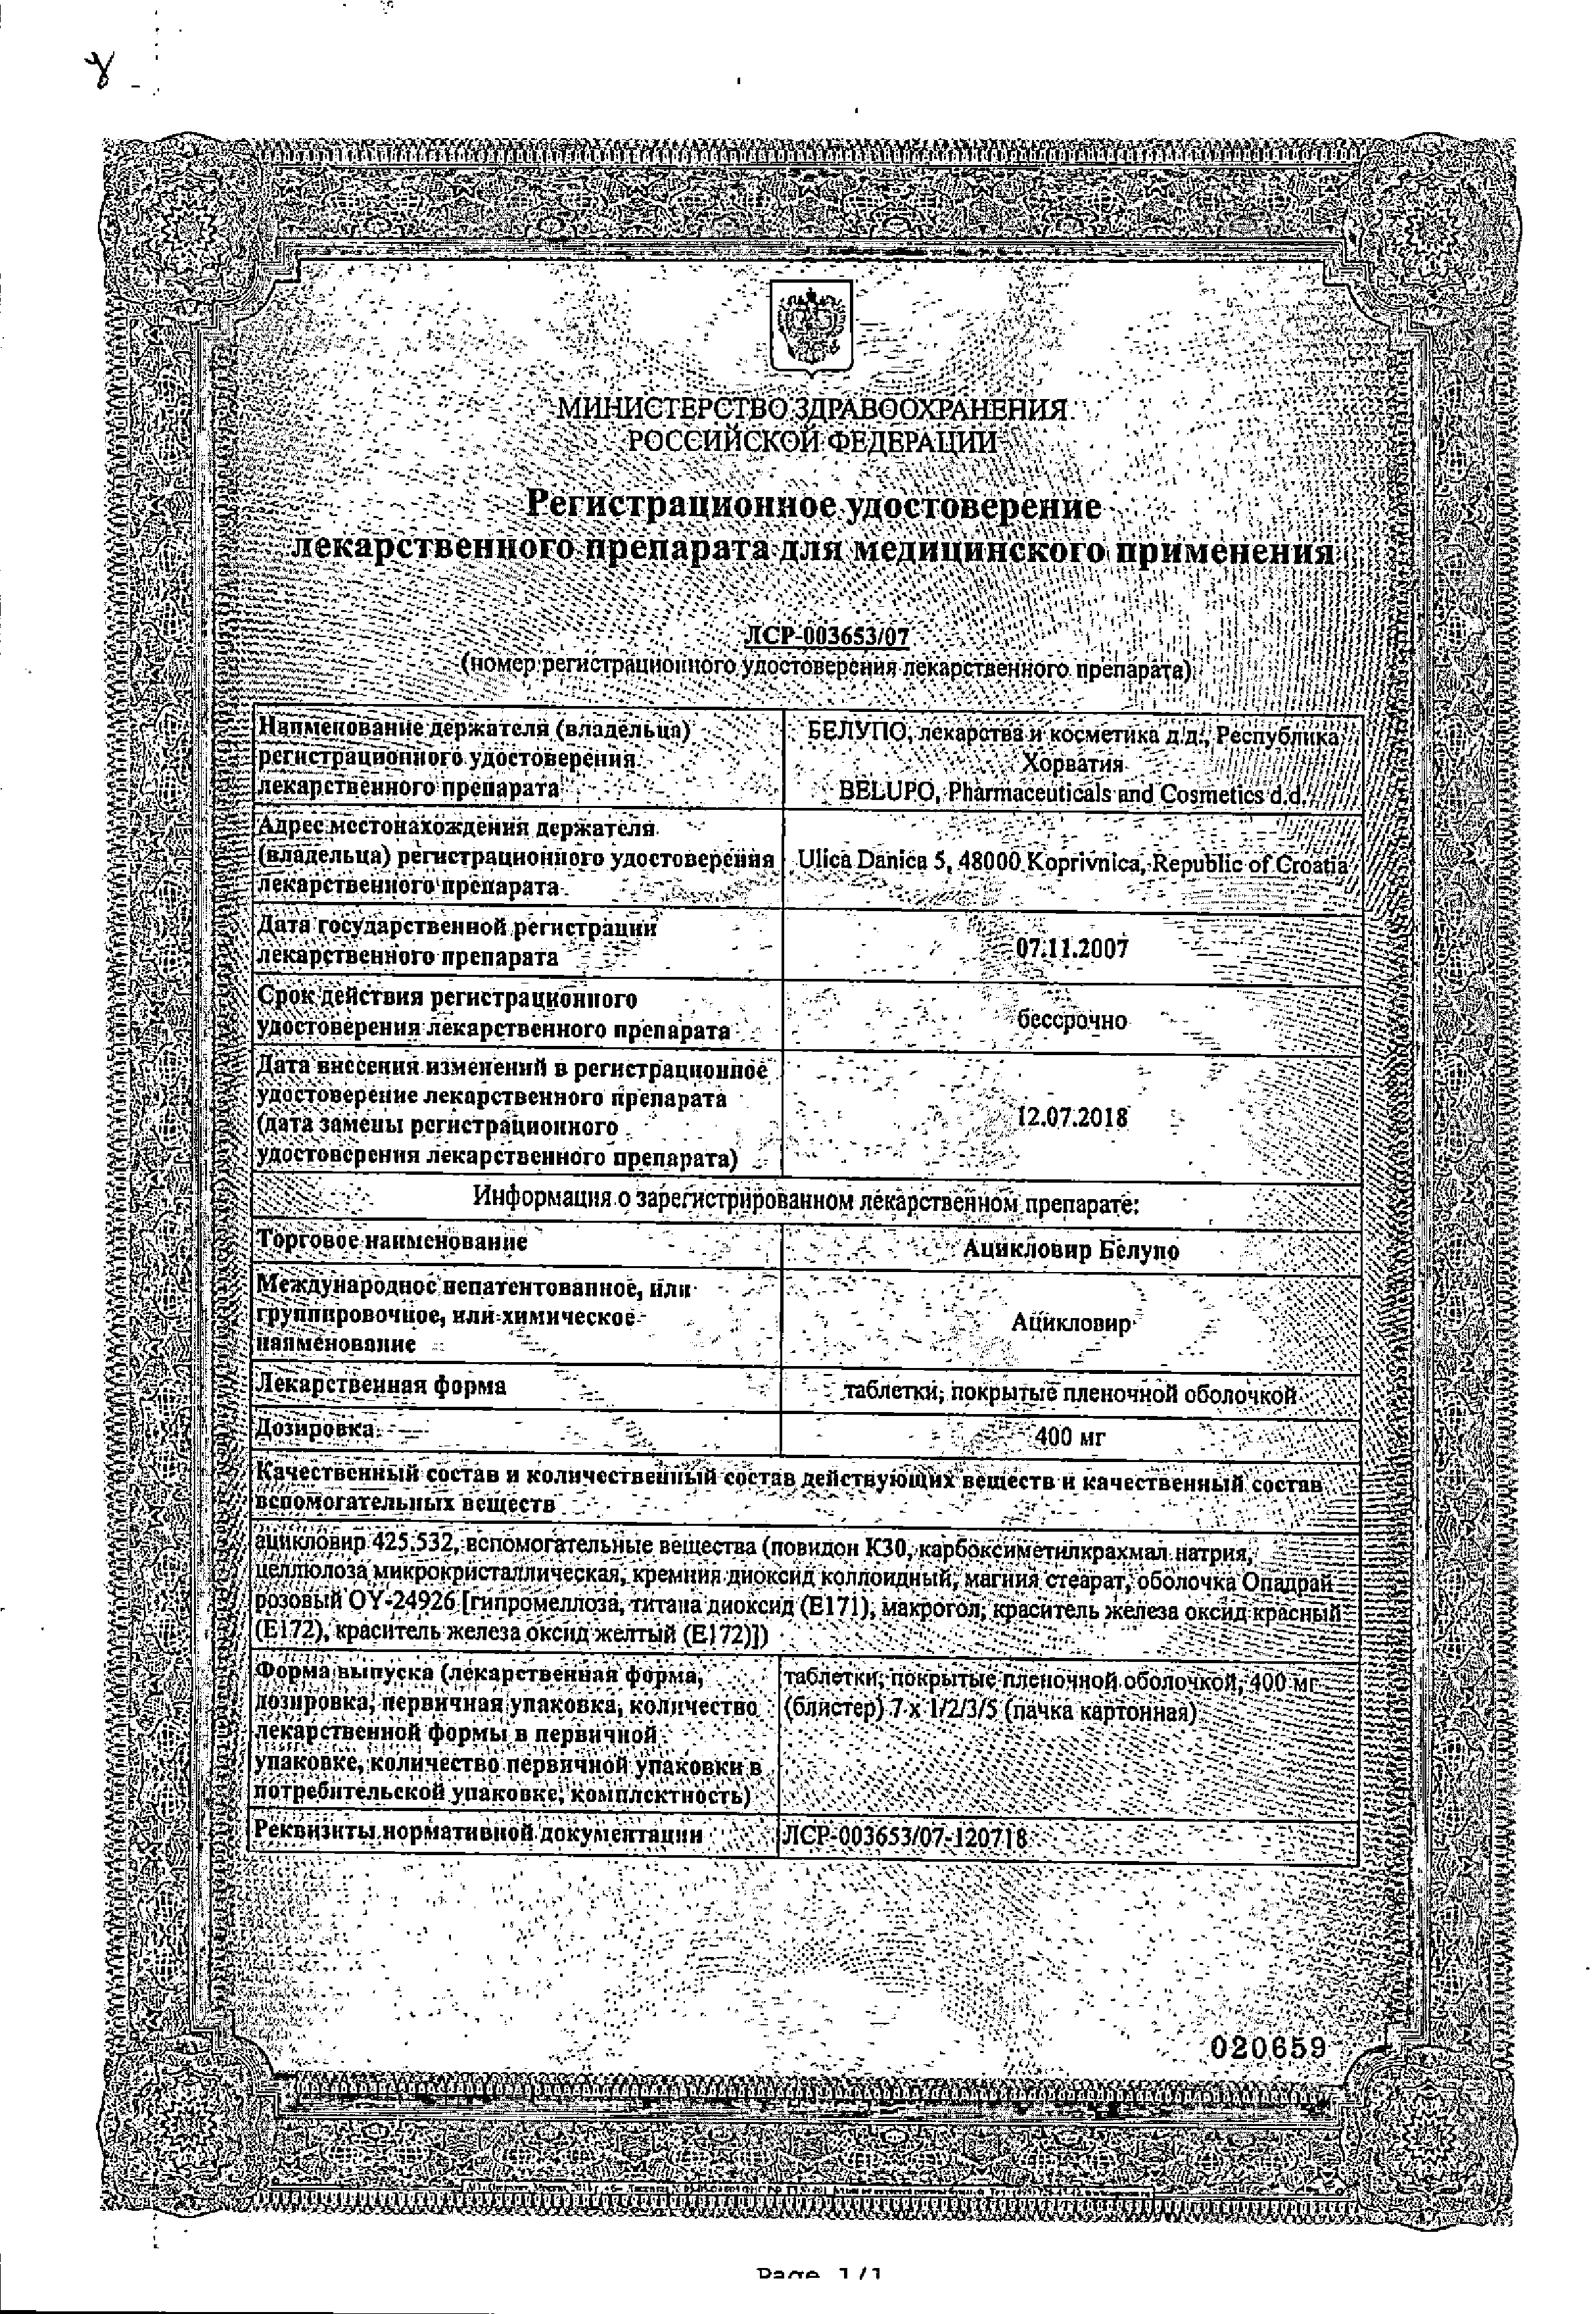 Ацикловир Белупо сертификат